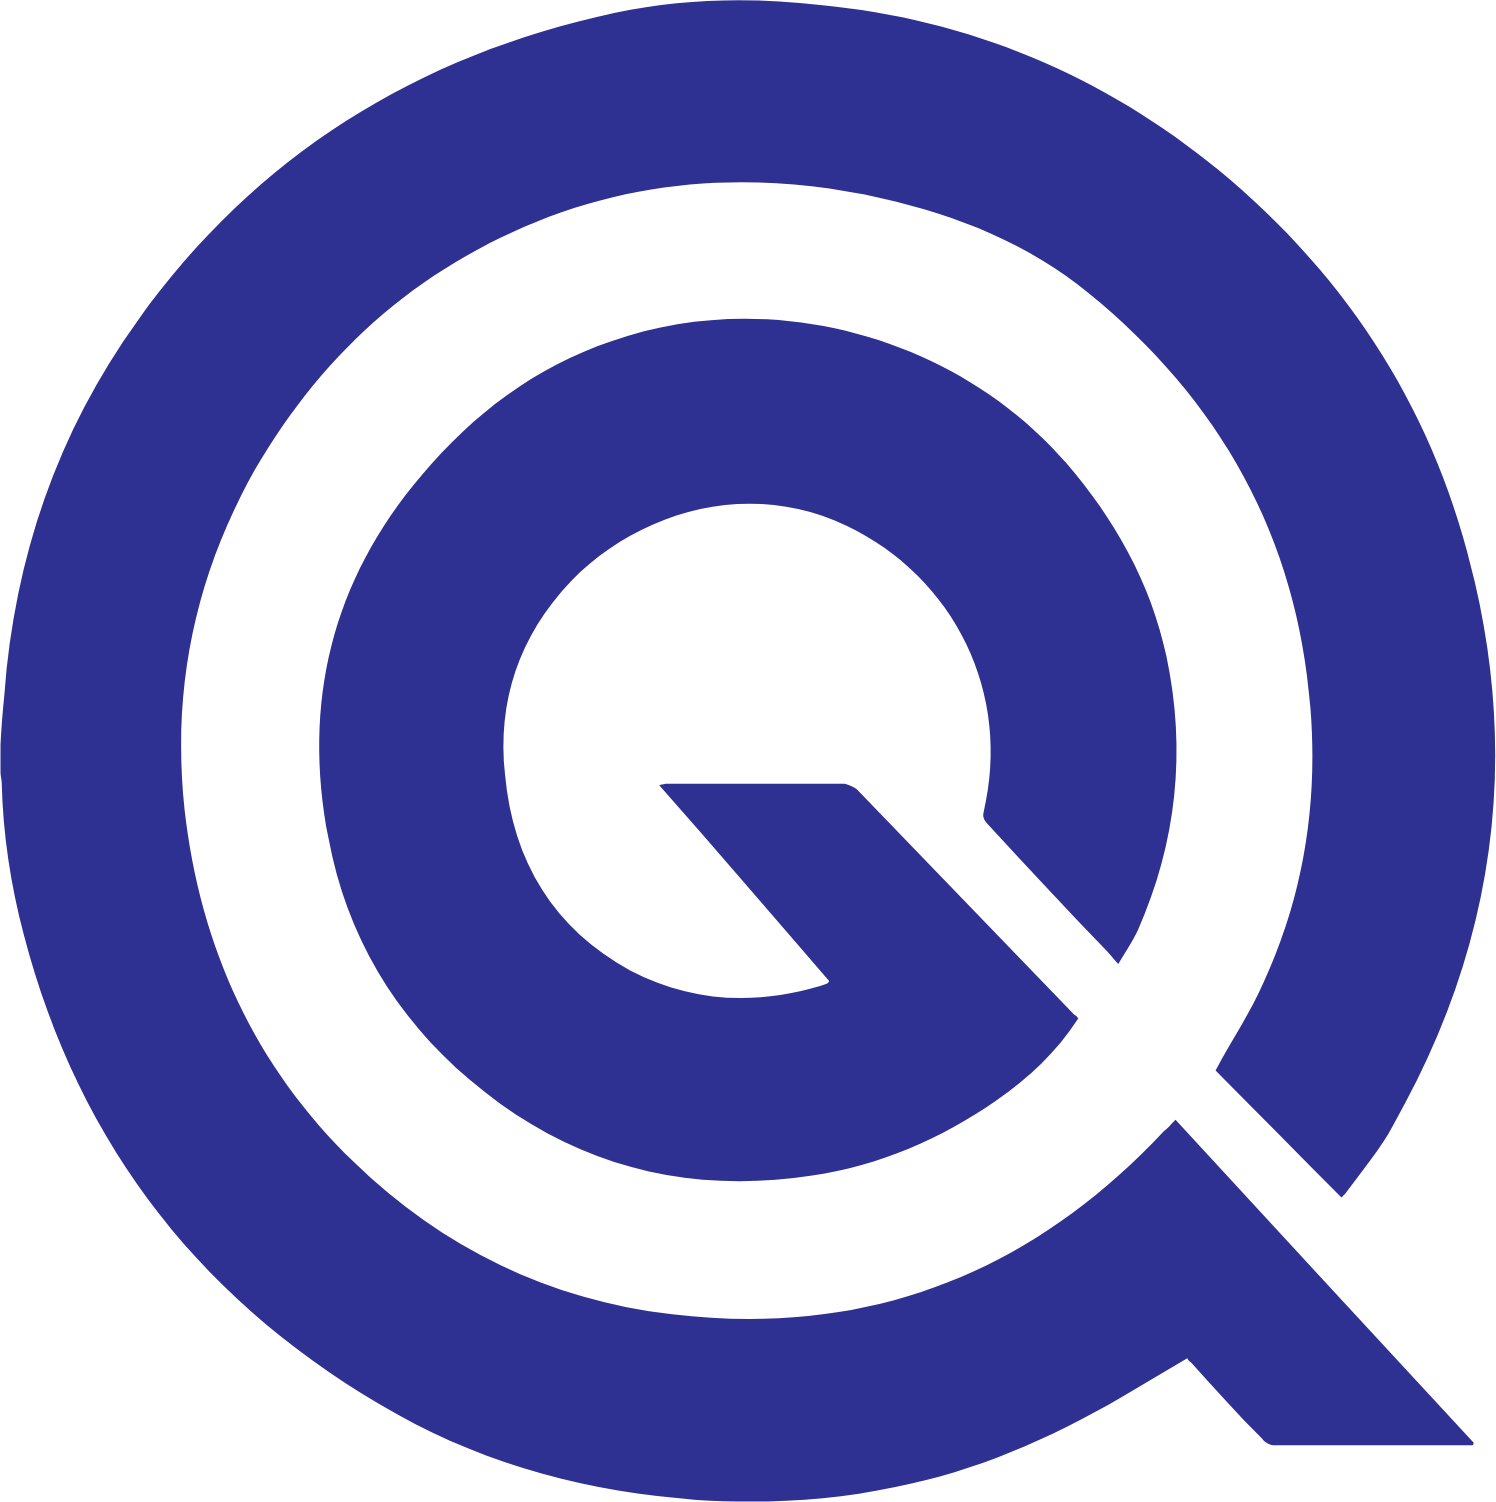 Qatar General Insurance & Reinsurance Company logo (PNG transparent)